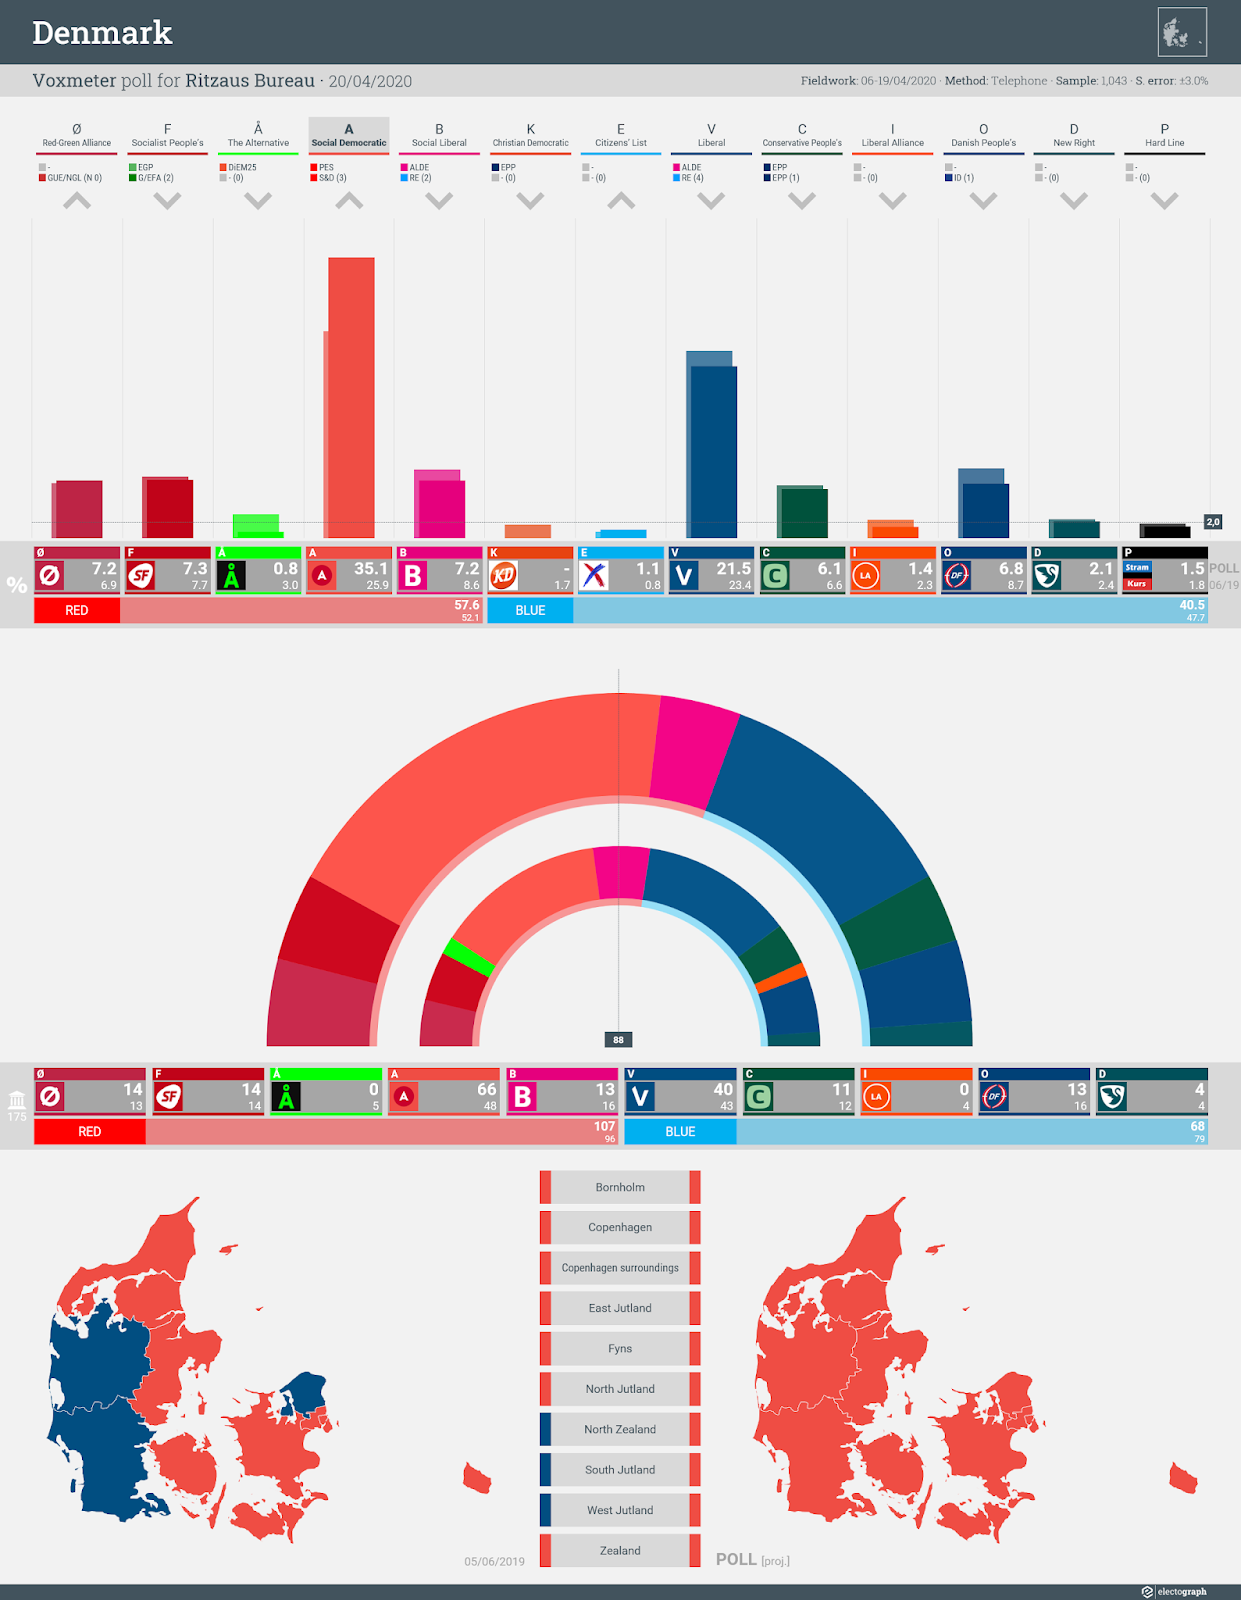 DENMARK: Voxmeter poll chart for Ritzau, 20 April 2020